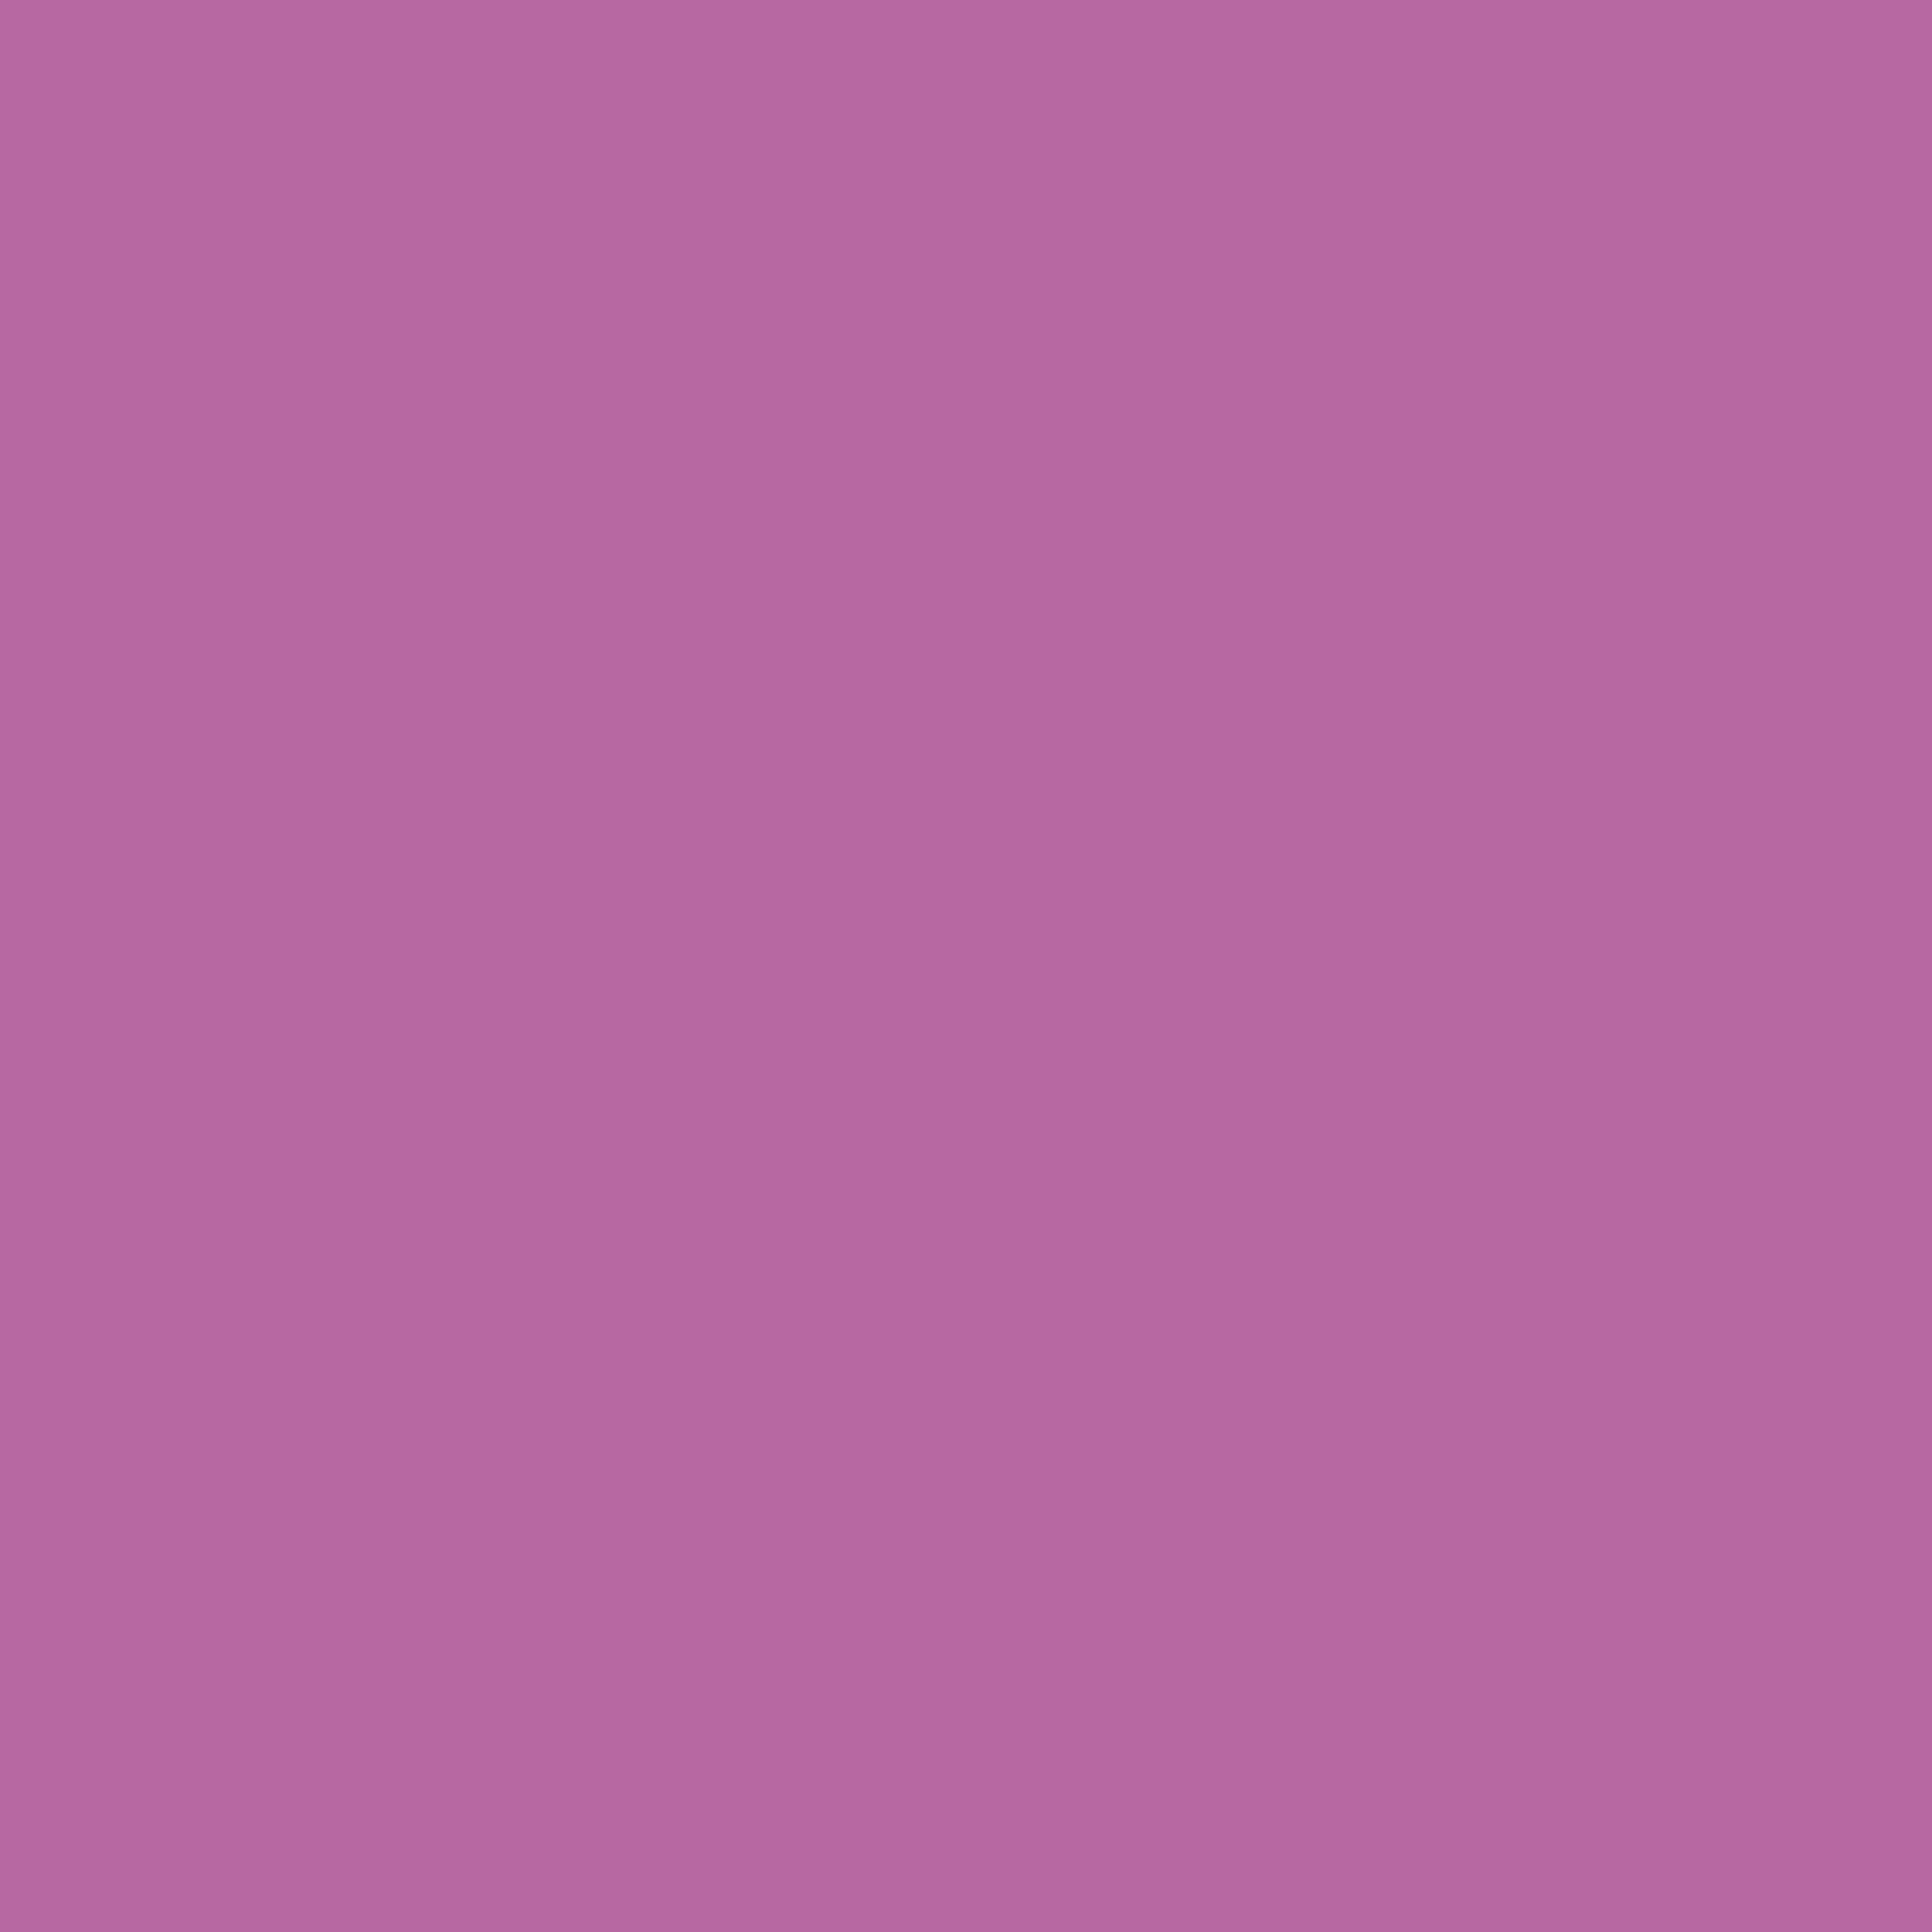 Solid Purple Background Desktop Wallpaper